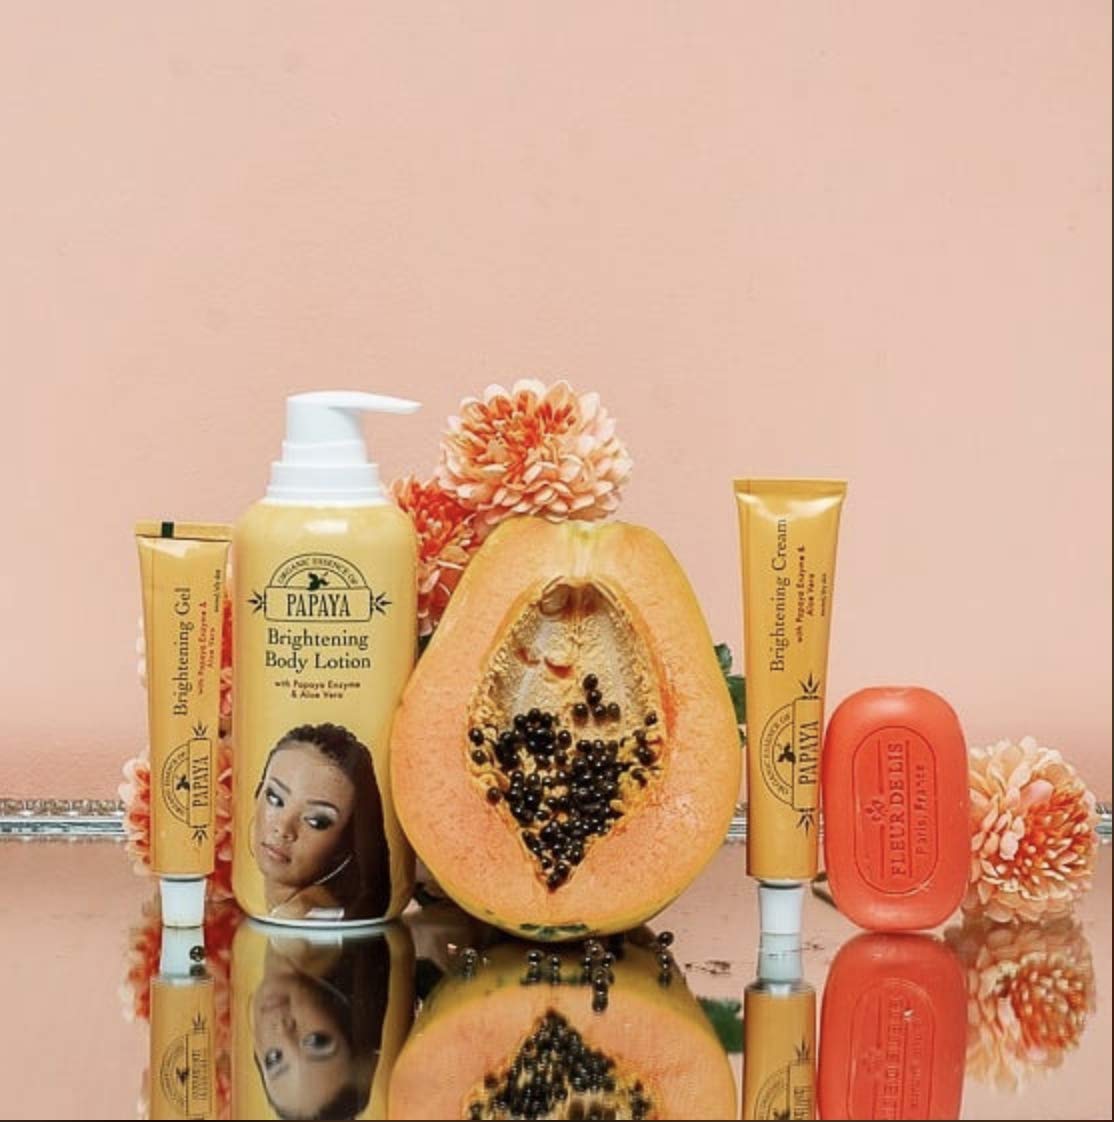 Organic Essence of  Papaya Soap 80gr